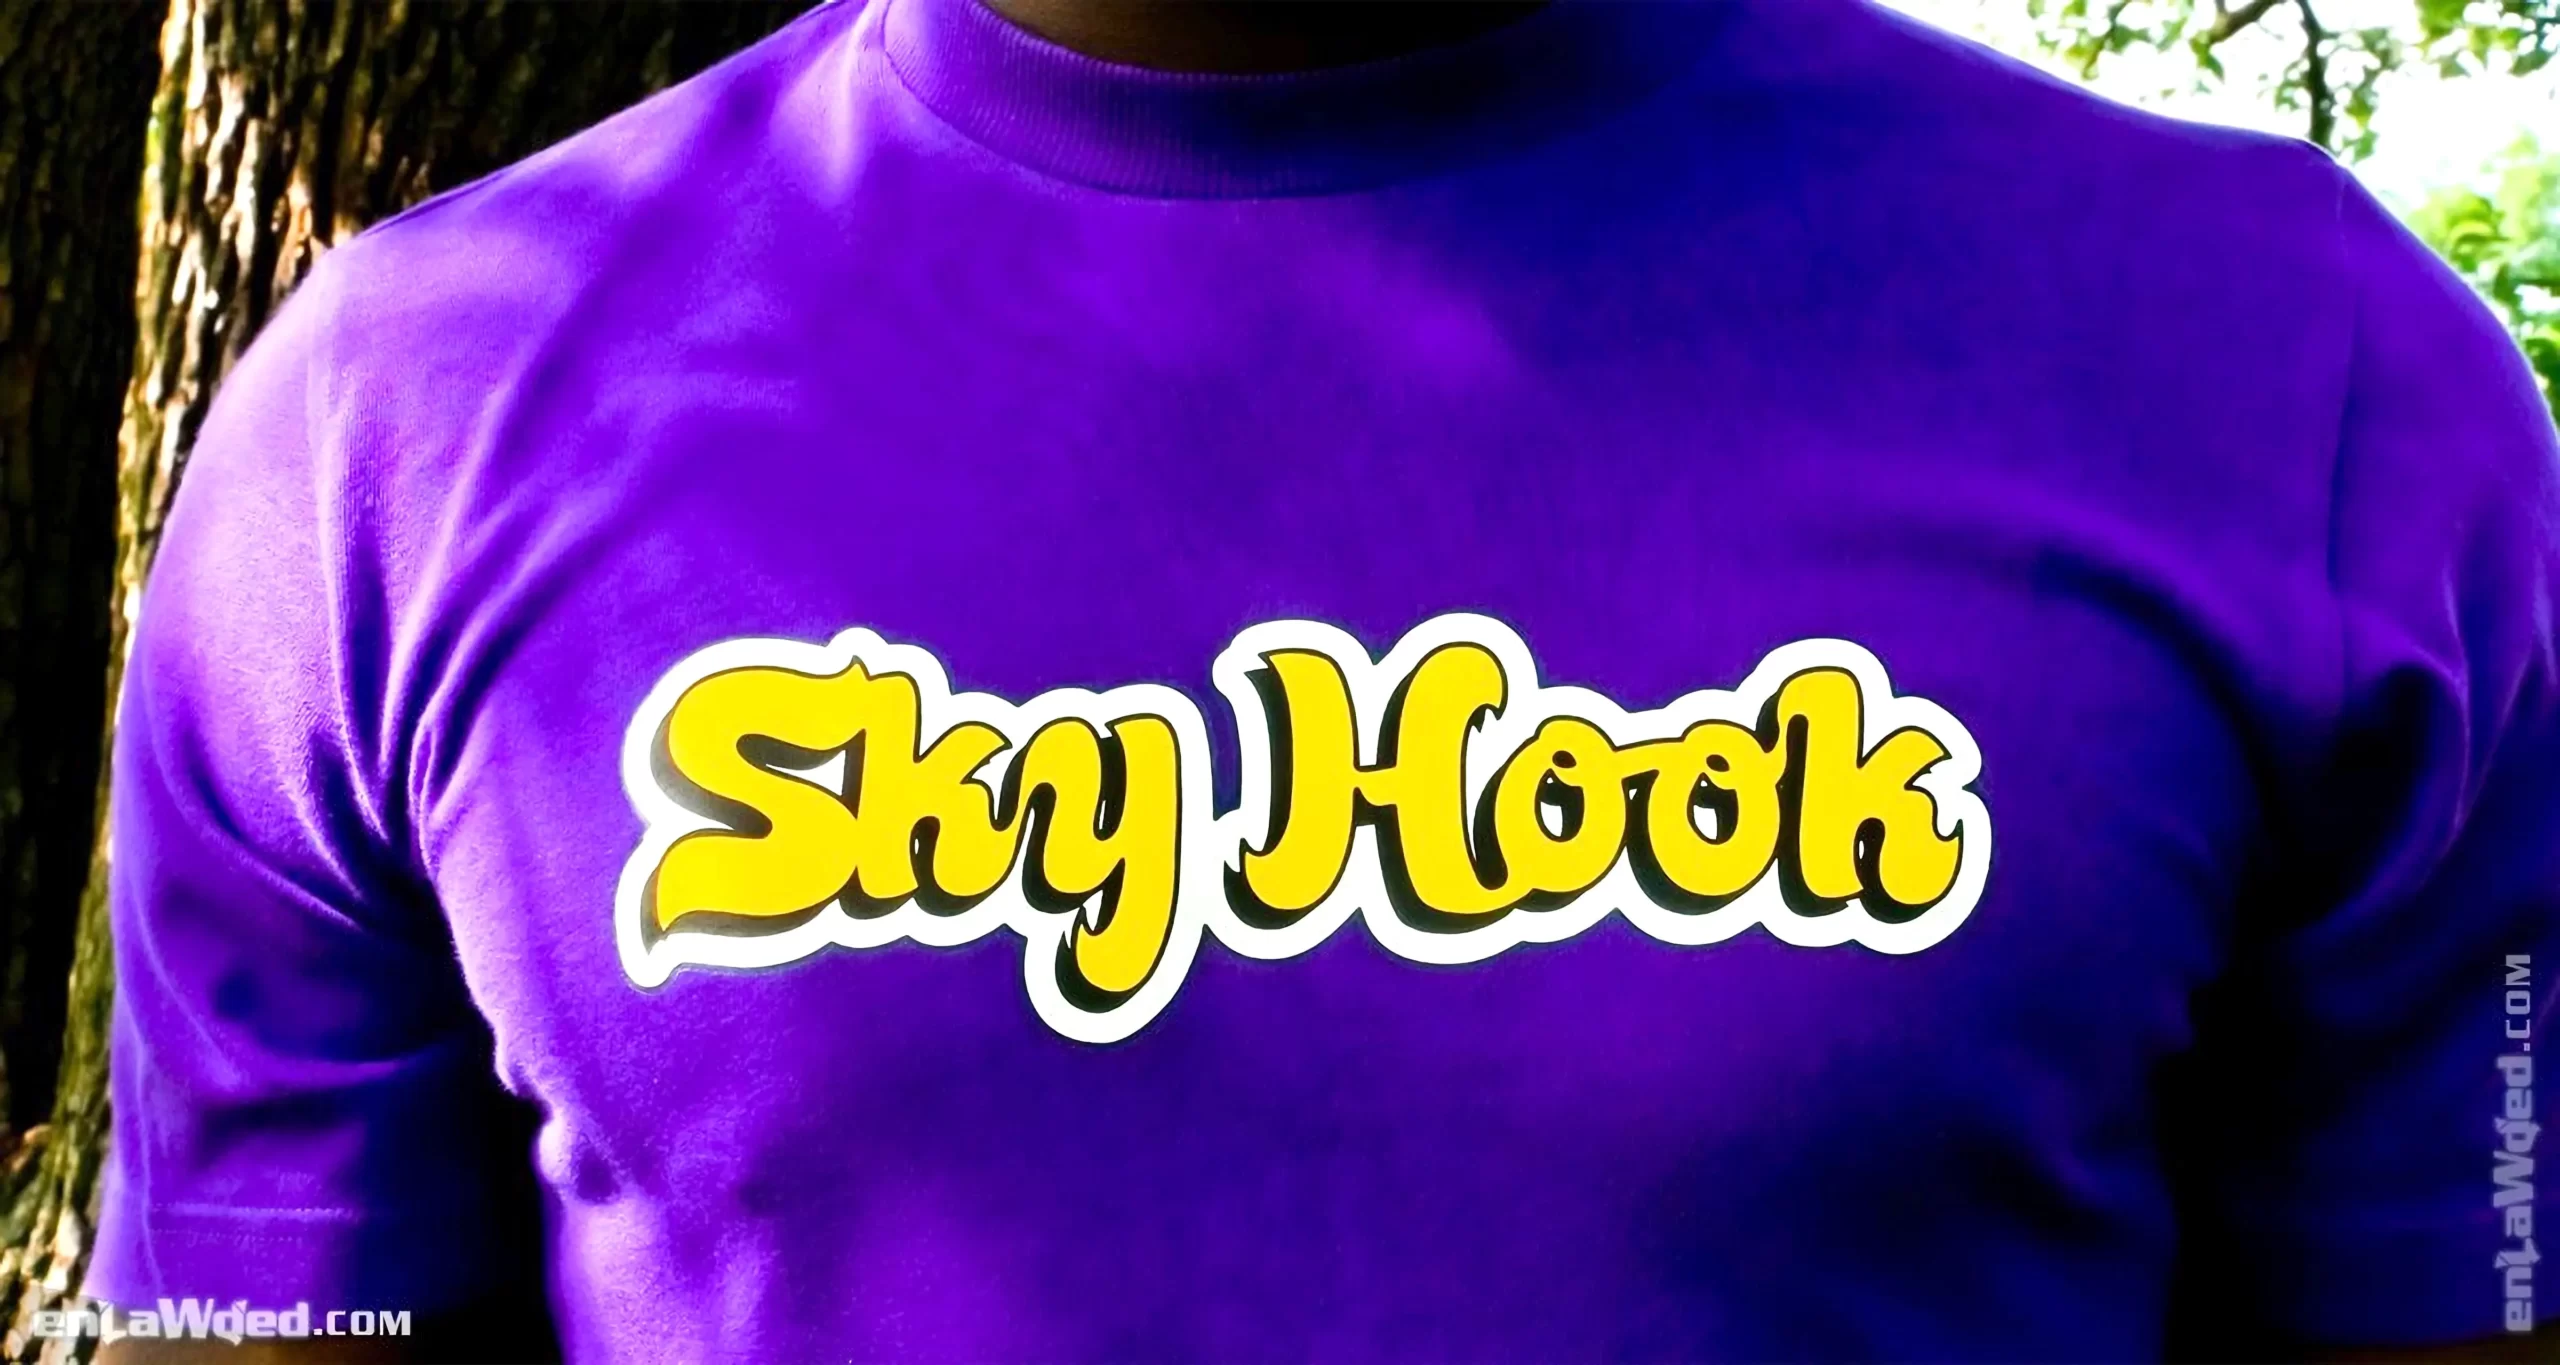 Men’s 2004 SkyHook Lakers #33 T-Shirt by Adidas: Unburdened (EnLawded.com file #lmchk90346ip2y124406kg9st)